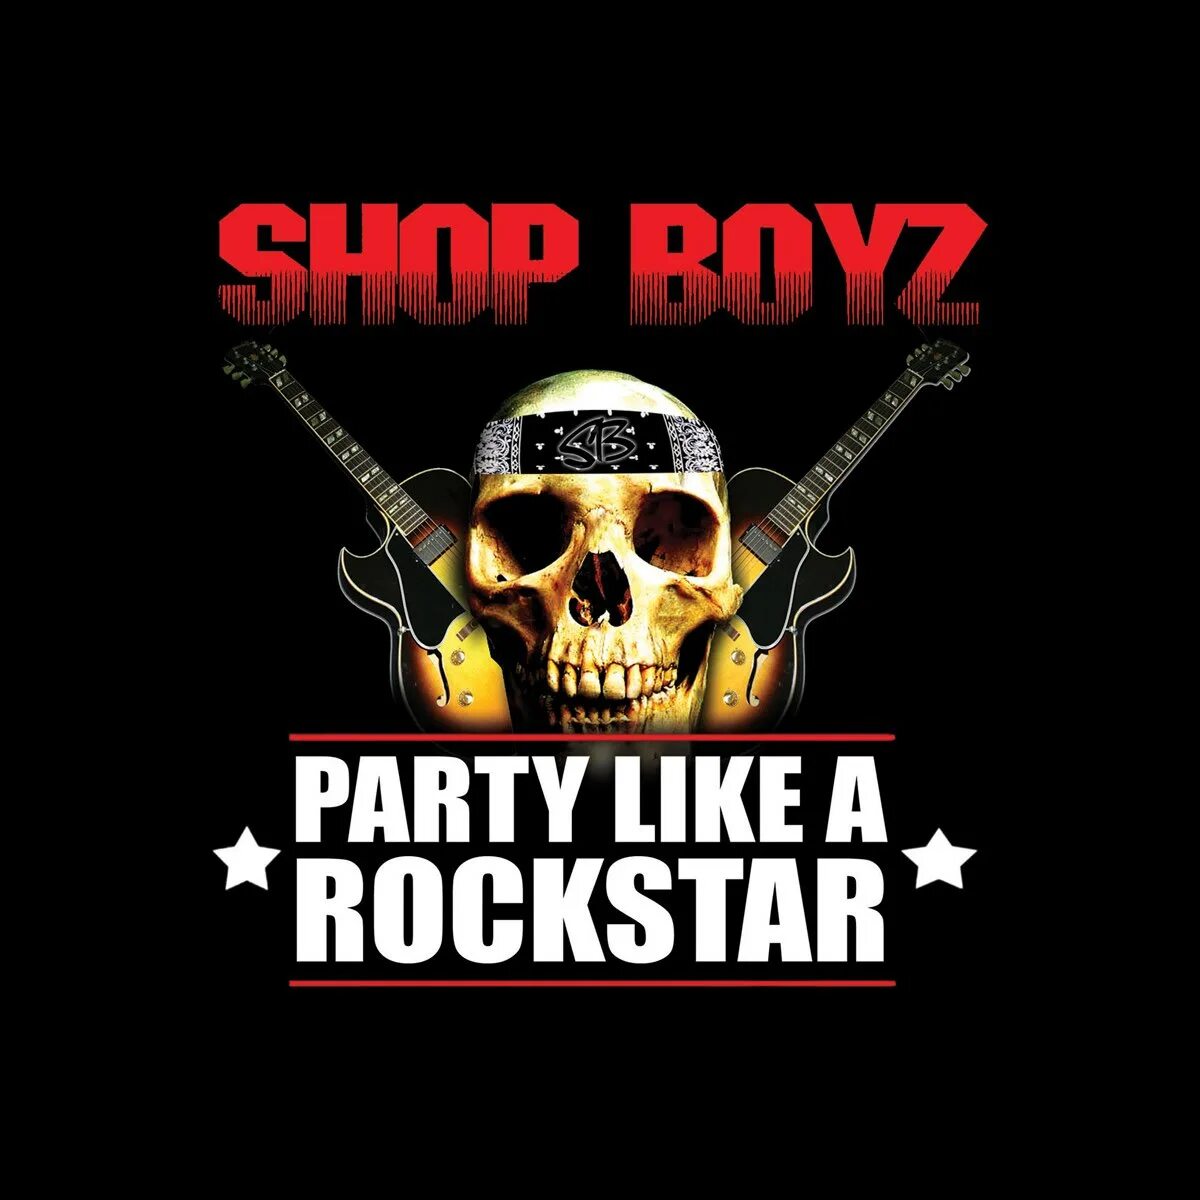 Песня party like a rockstar speed. Shop Boyz Party like a Rockstar. Party like a Rockstar. Shop boys - Rockstar Mentality. Вайт панк рокстар обложка.